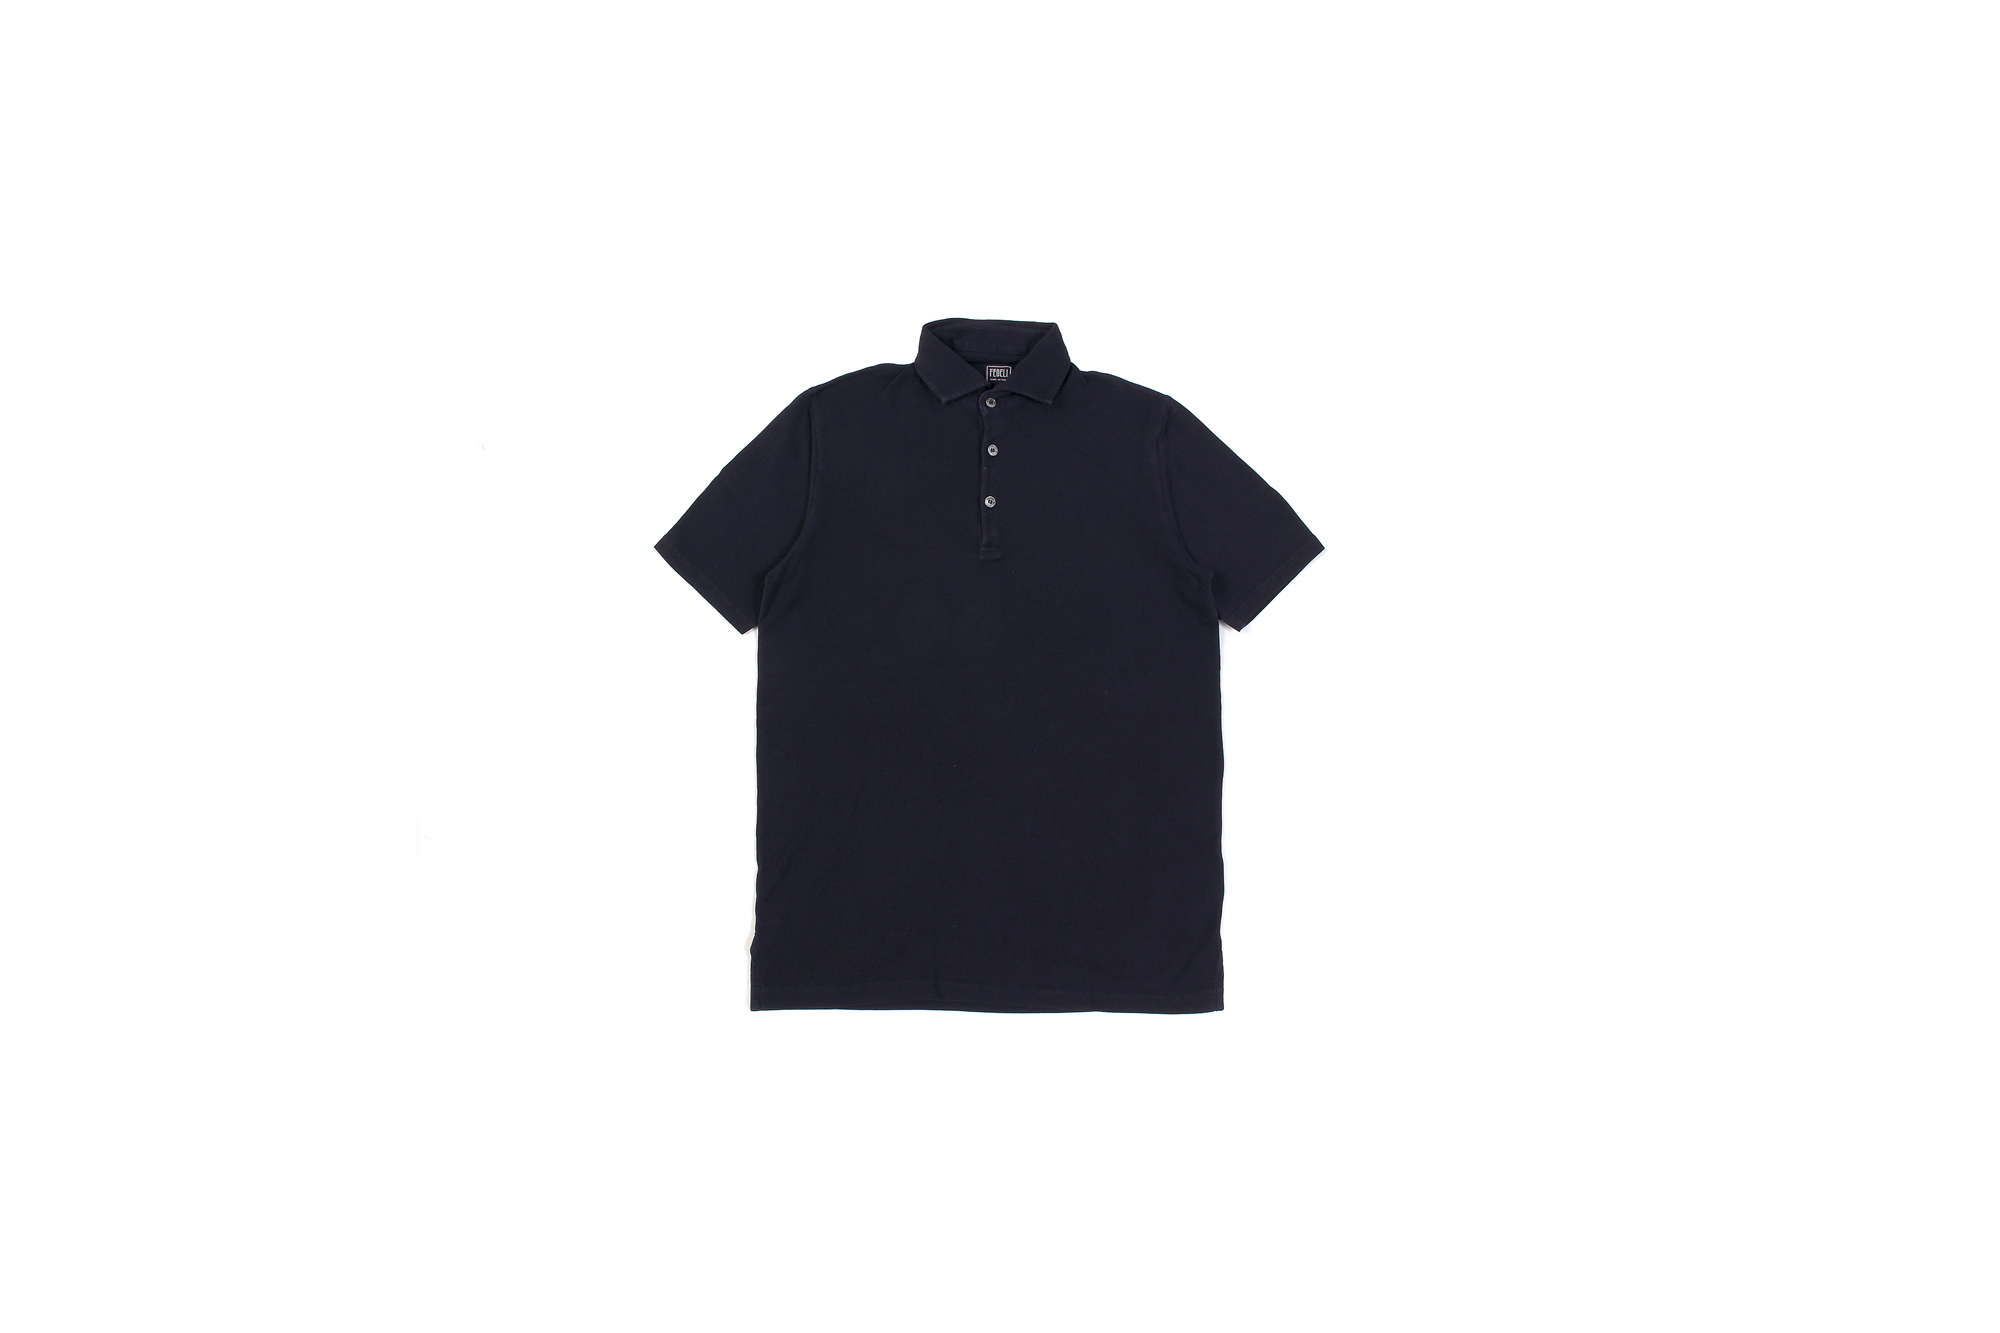 FEDELI(フェデーリ) Piquet Polo Shirt (ピケ ポロシャツ) カノコ ポロシャツ NAVY (ネイビー・626) made in italy (イタリア製)2020 春夏 【ご予約開始】愛知 名古屋 altoediritto アルトエデリット ポロ